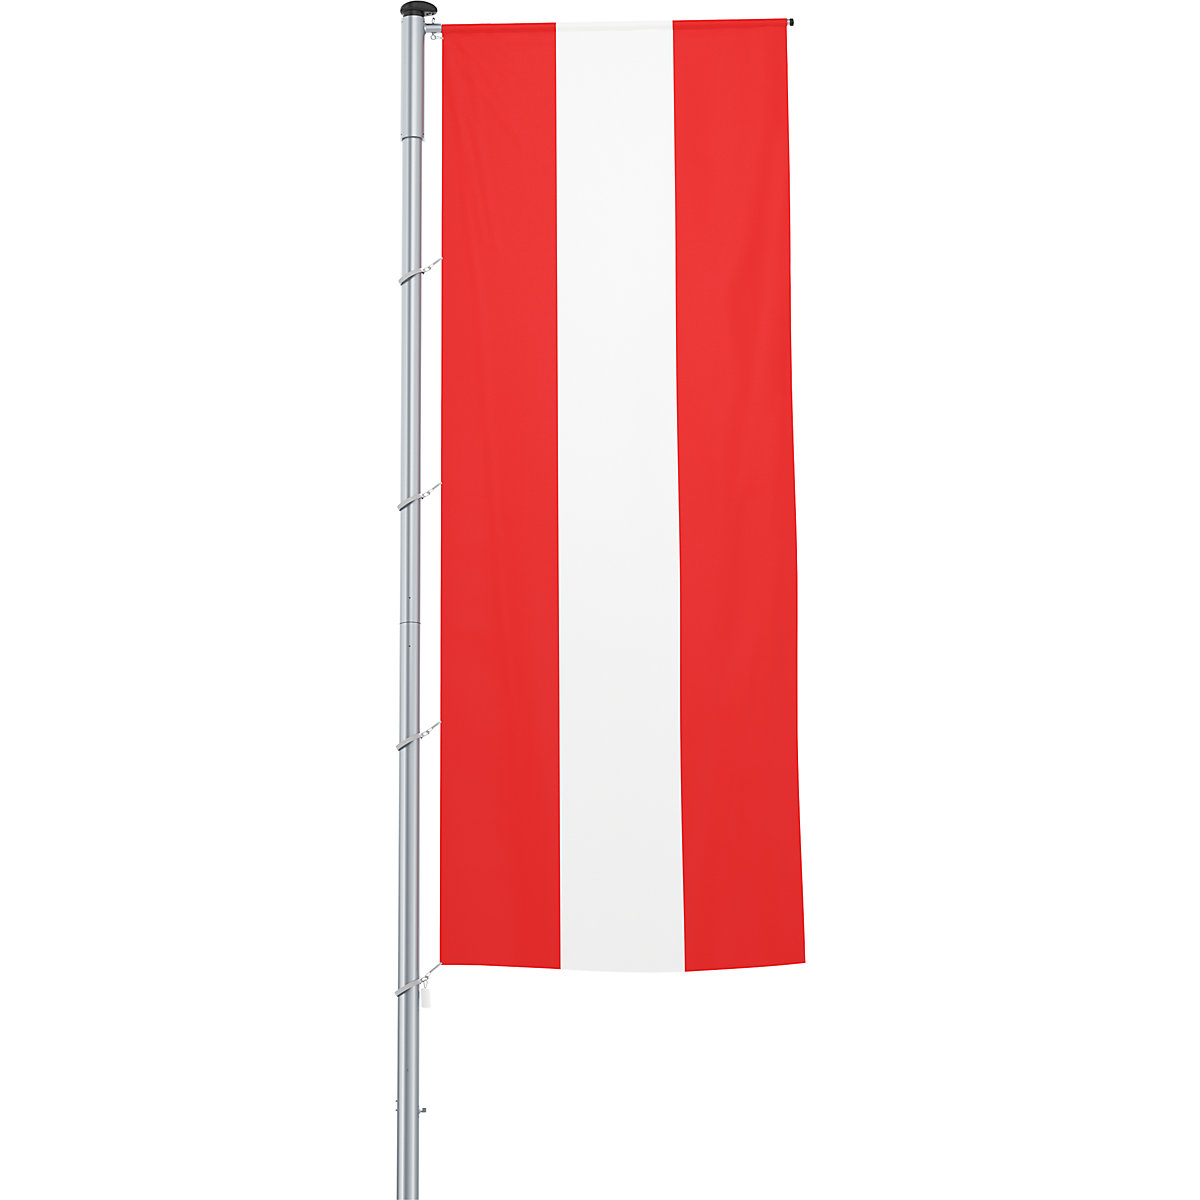 Steag pentru braț/drapel național – Mannus, format 1,2 x 3 m, Austria-28